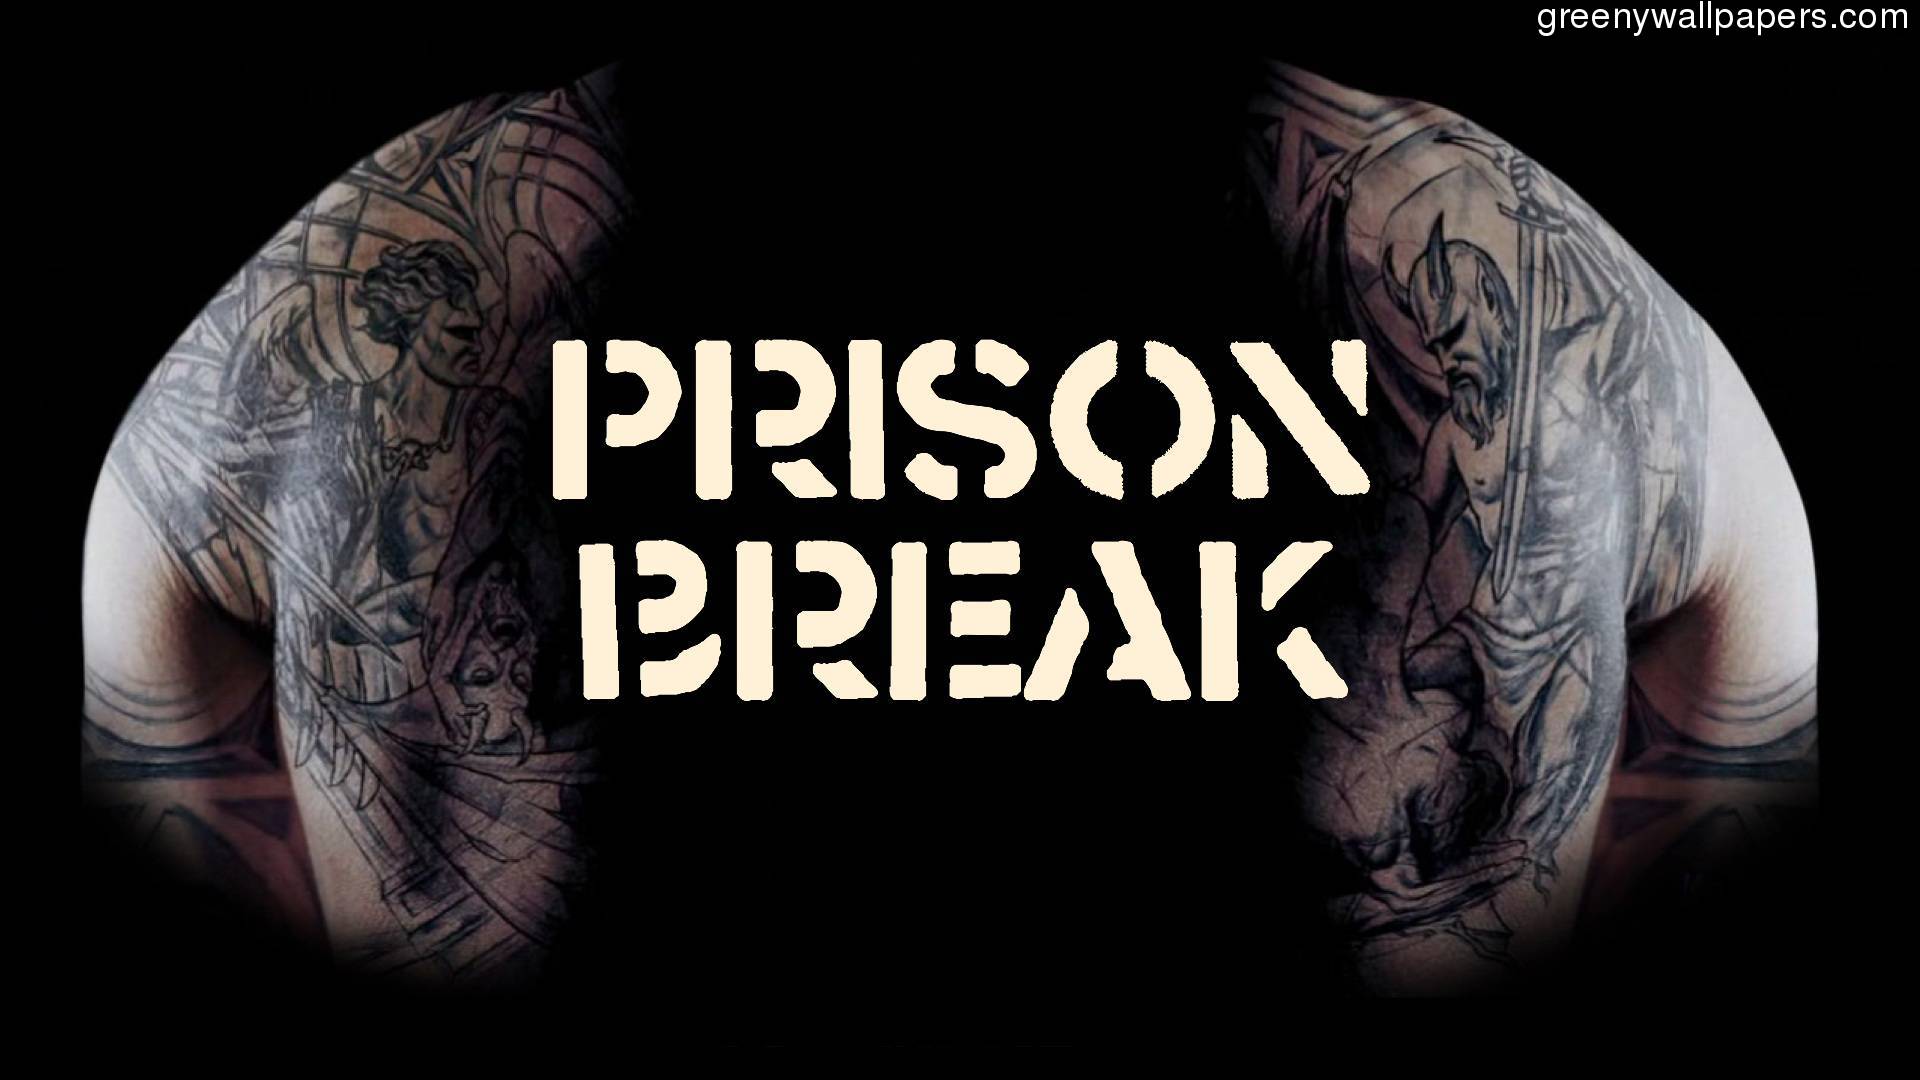 Prison Break Wallpaper, Special HDQ Live Prison Break Wallpaper